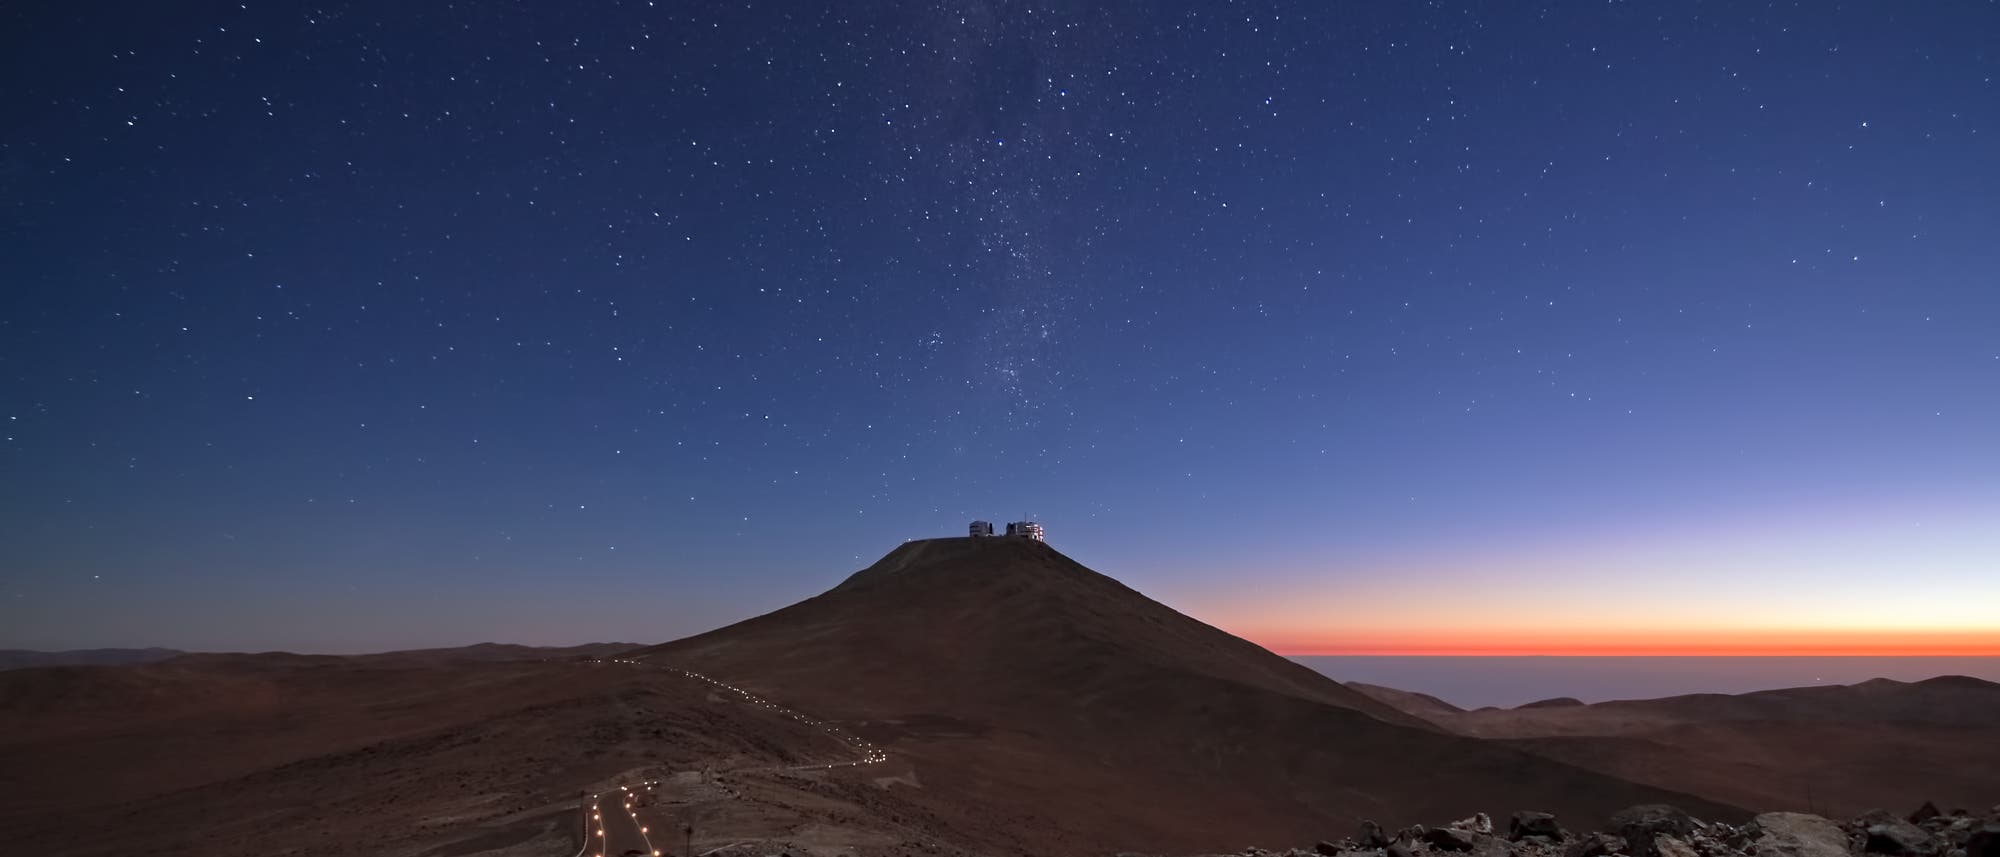 Das Very Large Telescope (VLT) in Chile